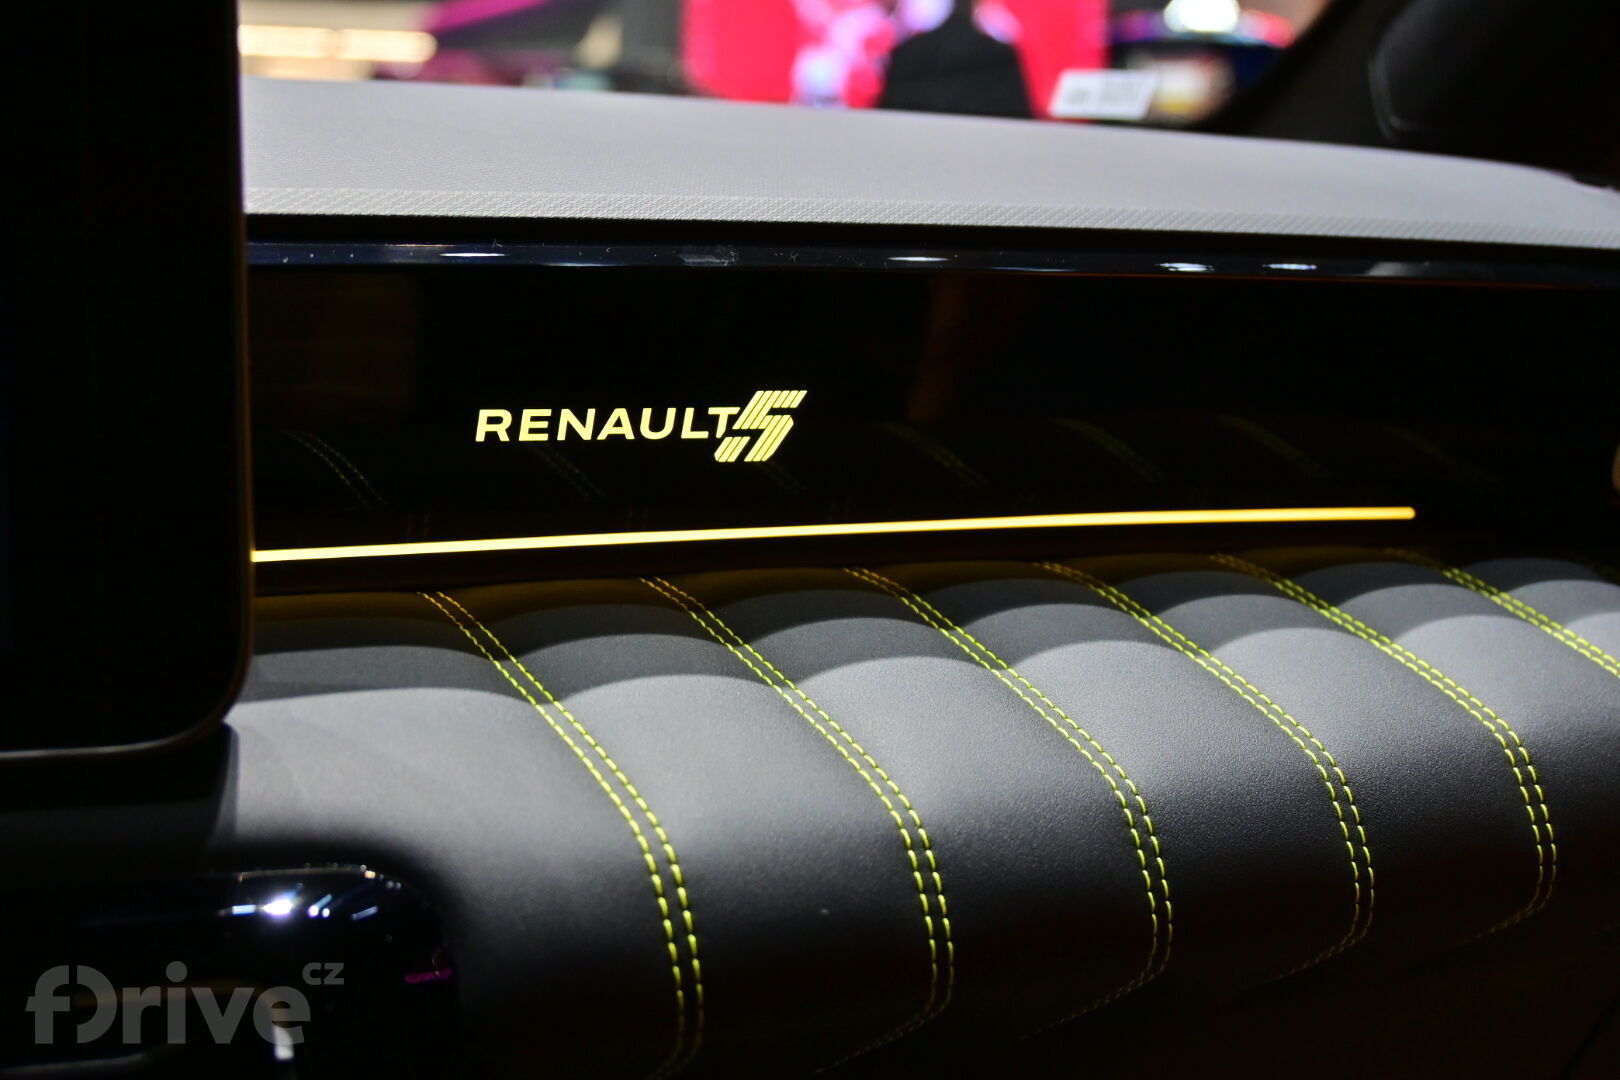 Renault 5 Electric